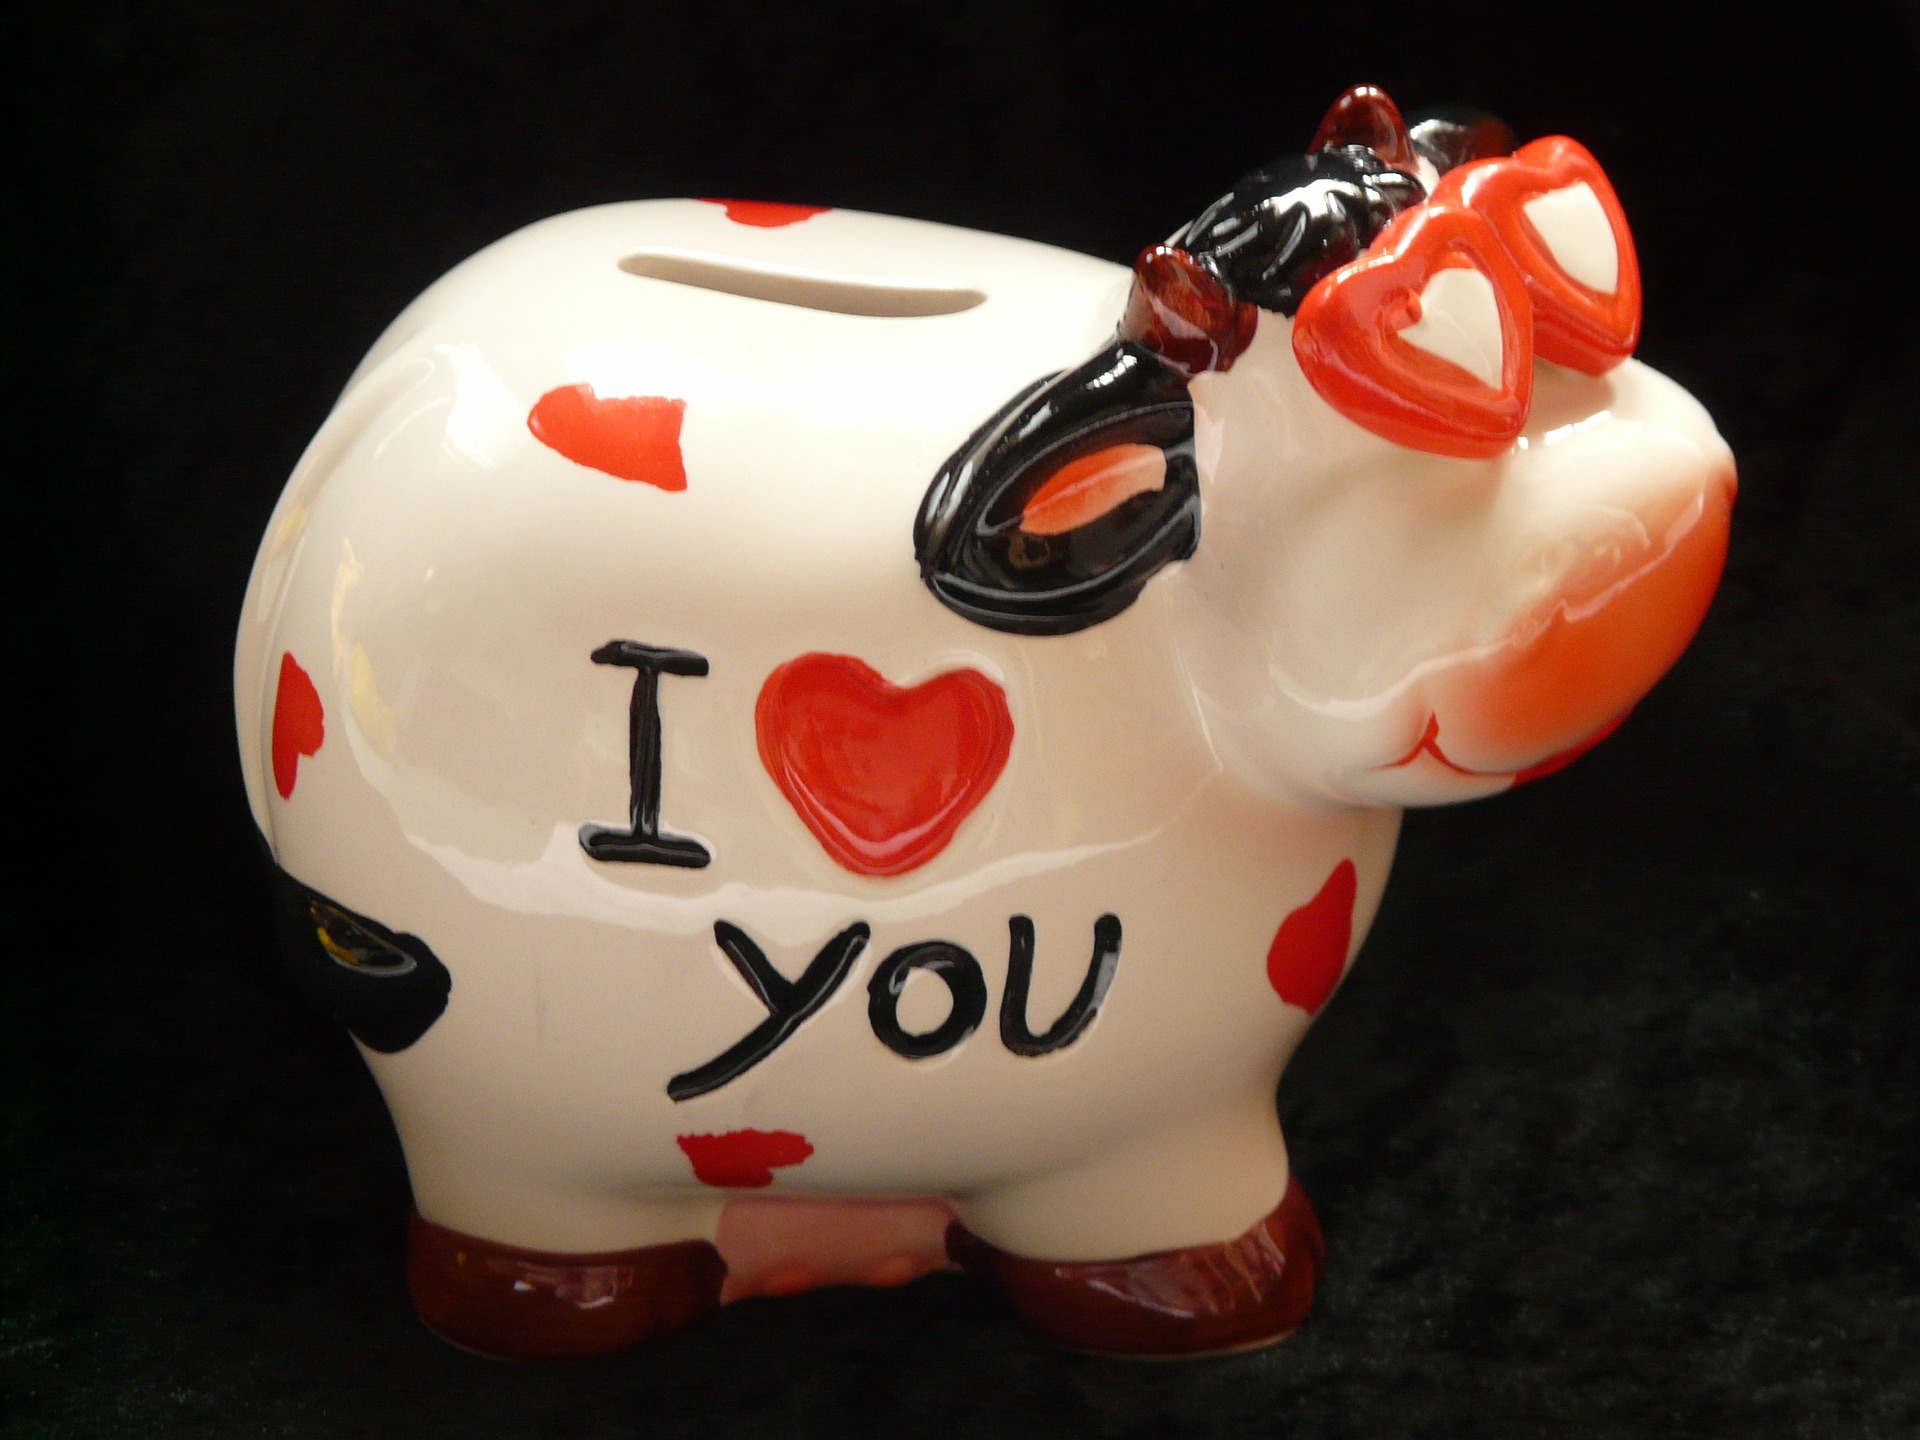 Life insurance Piggy Bank for estate planning.